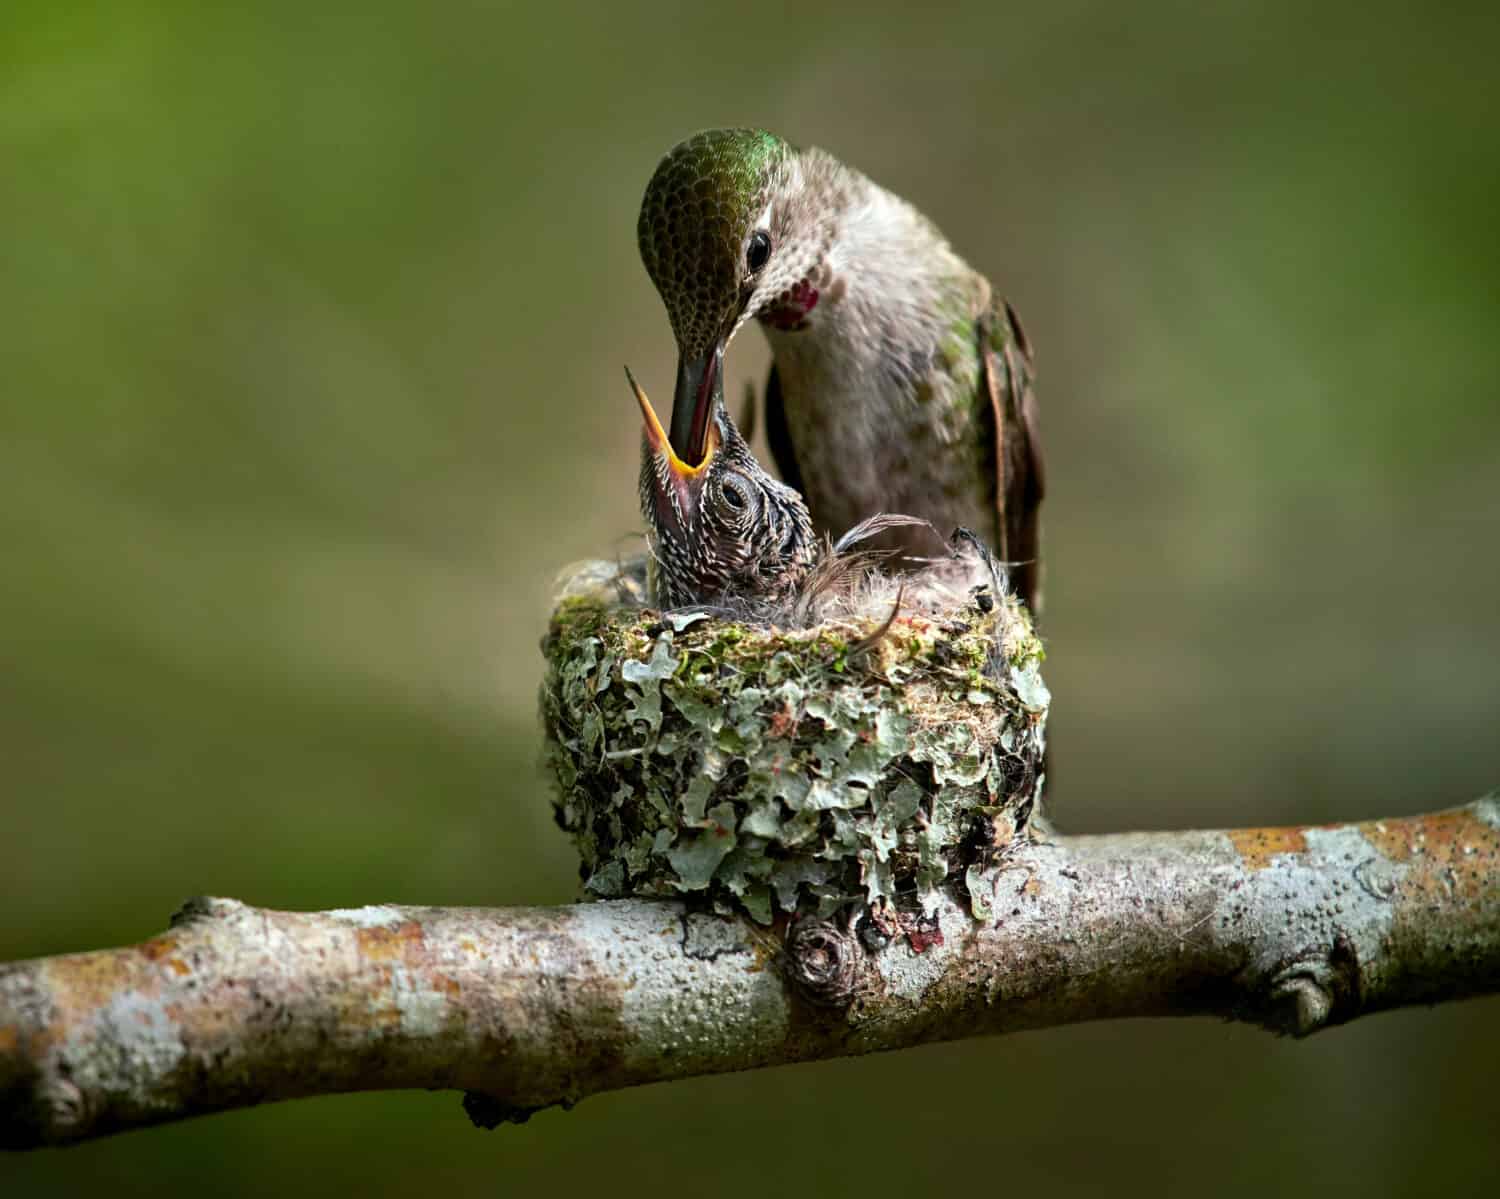 Hummingbird feeding baby in the nest